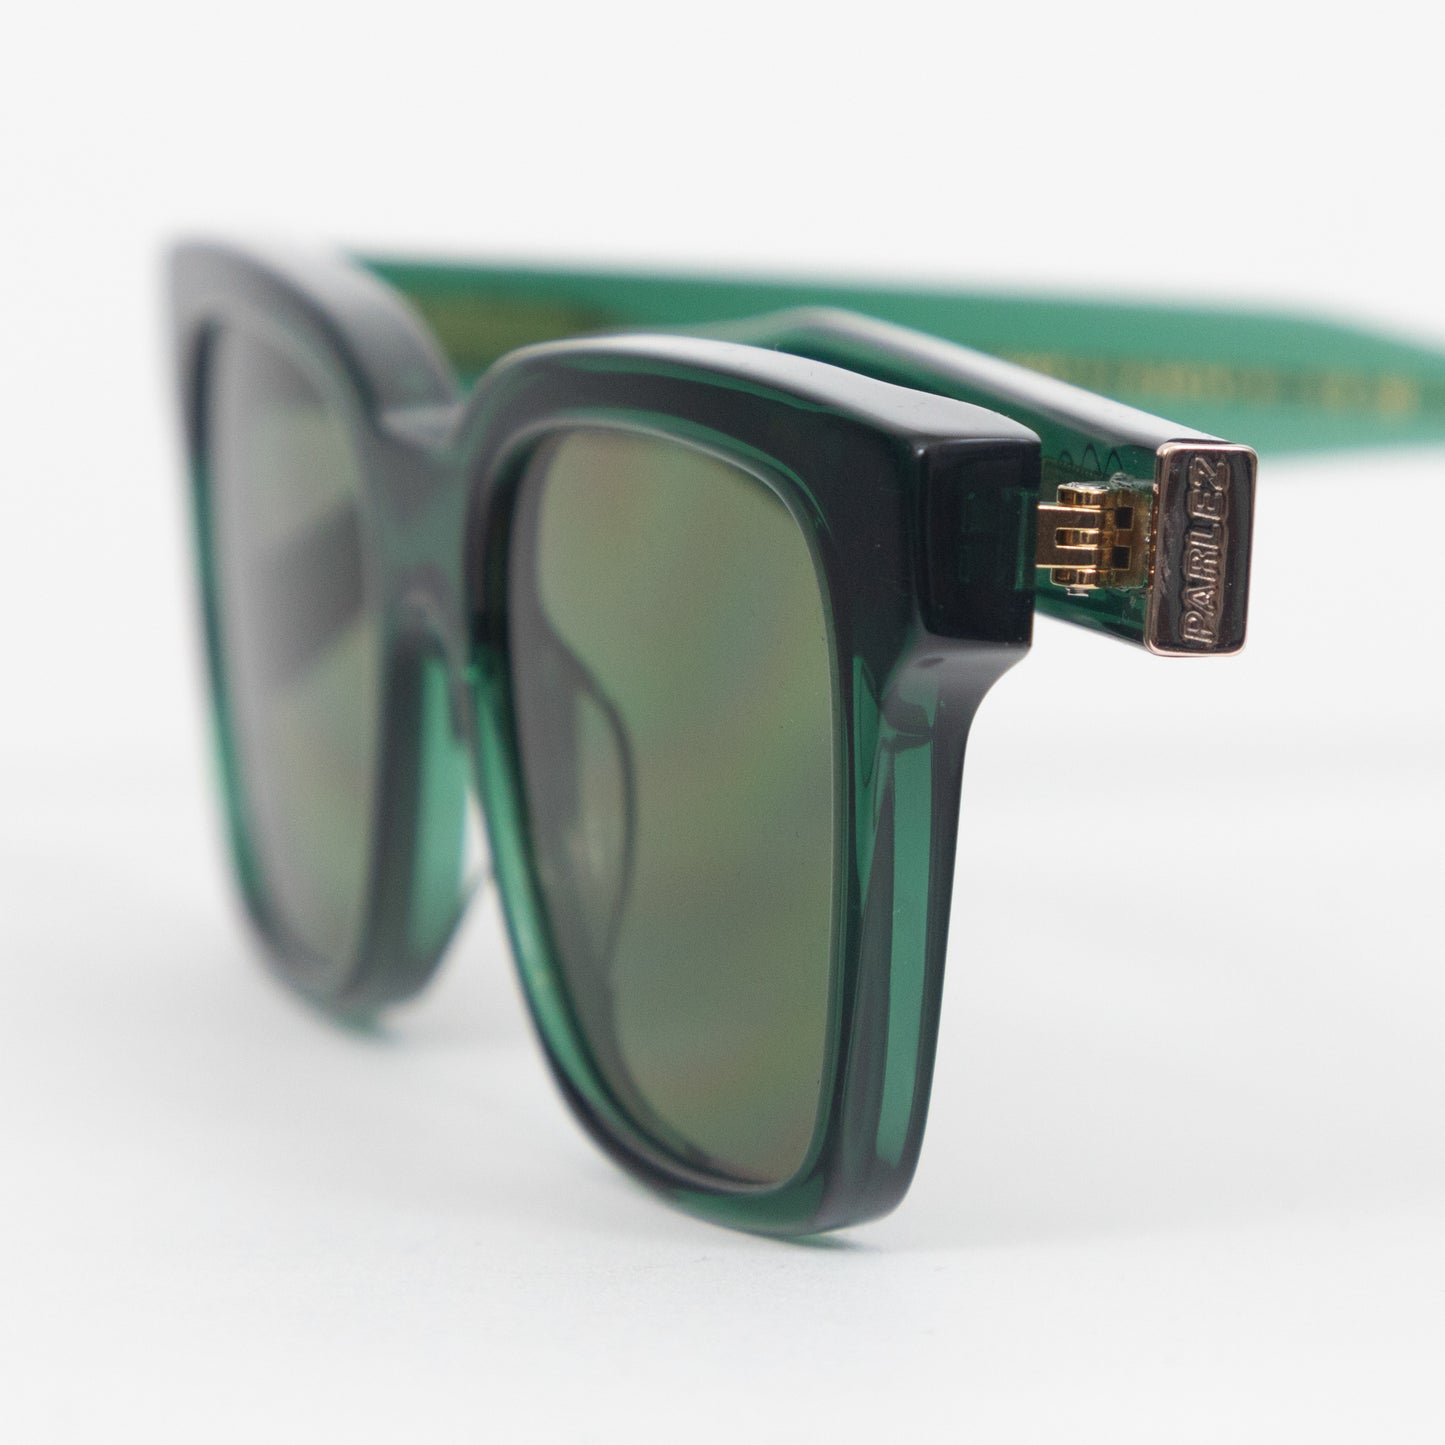 PARLEZ X MESSYWEEKEND Sunglasses in GREEN